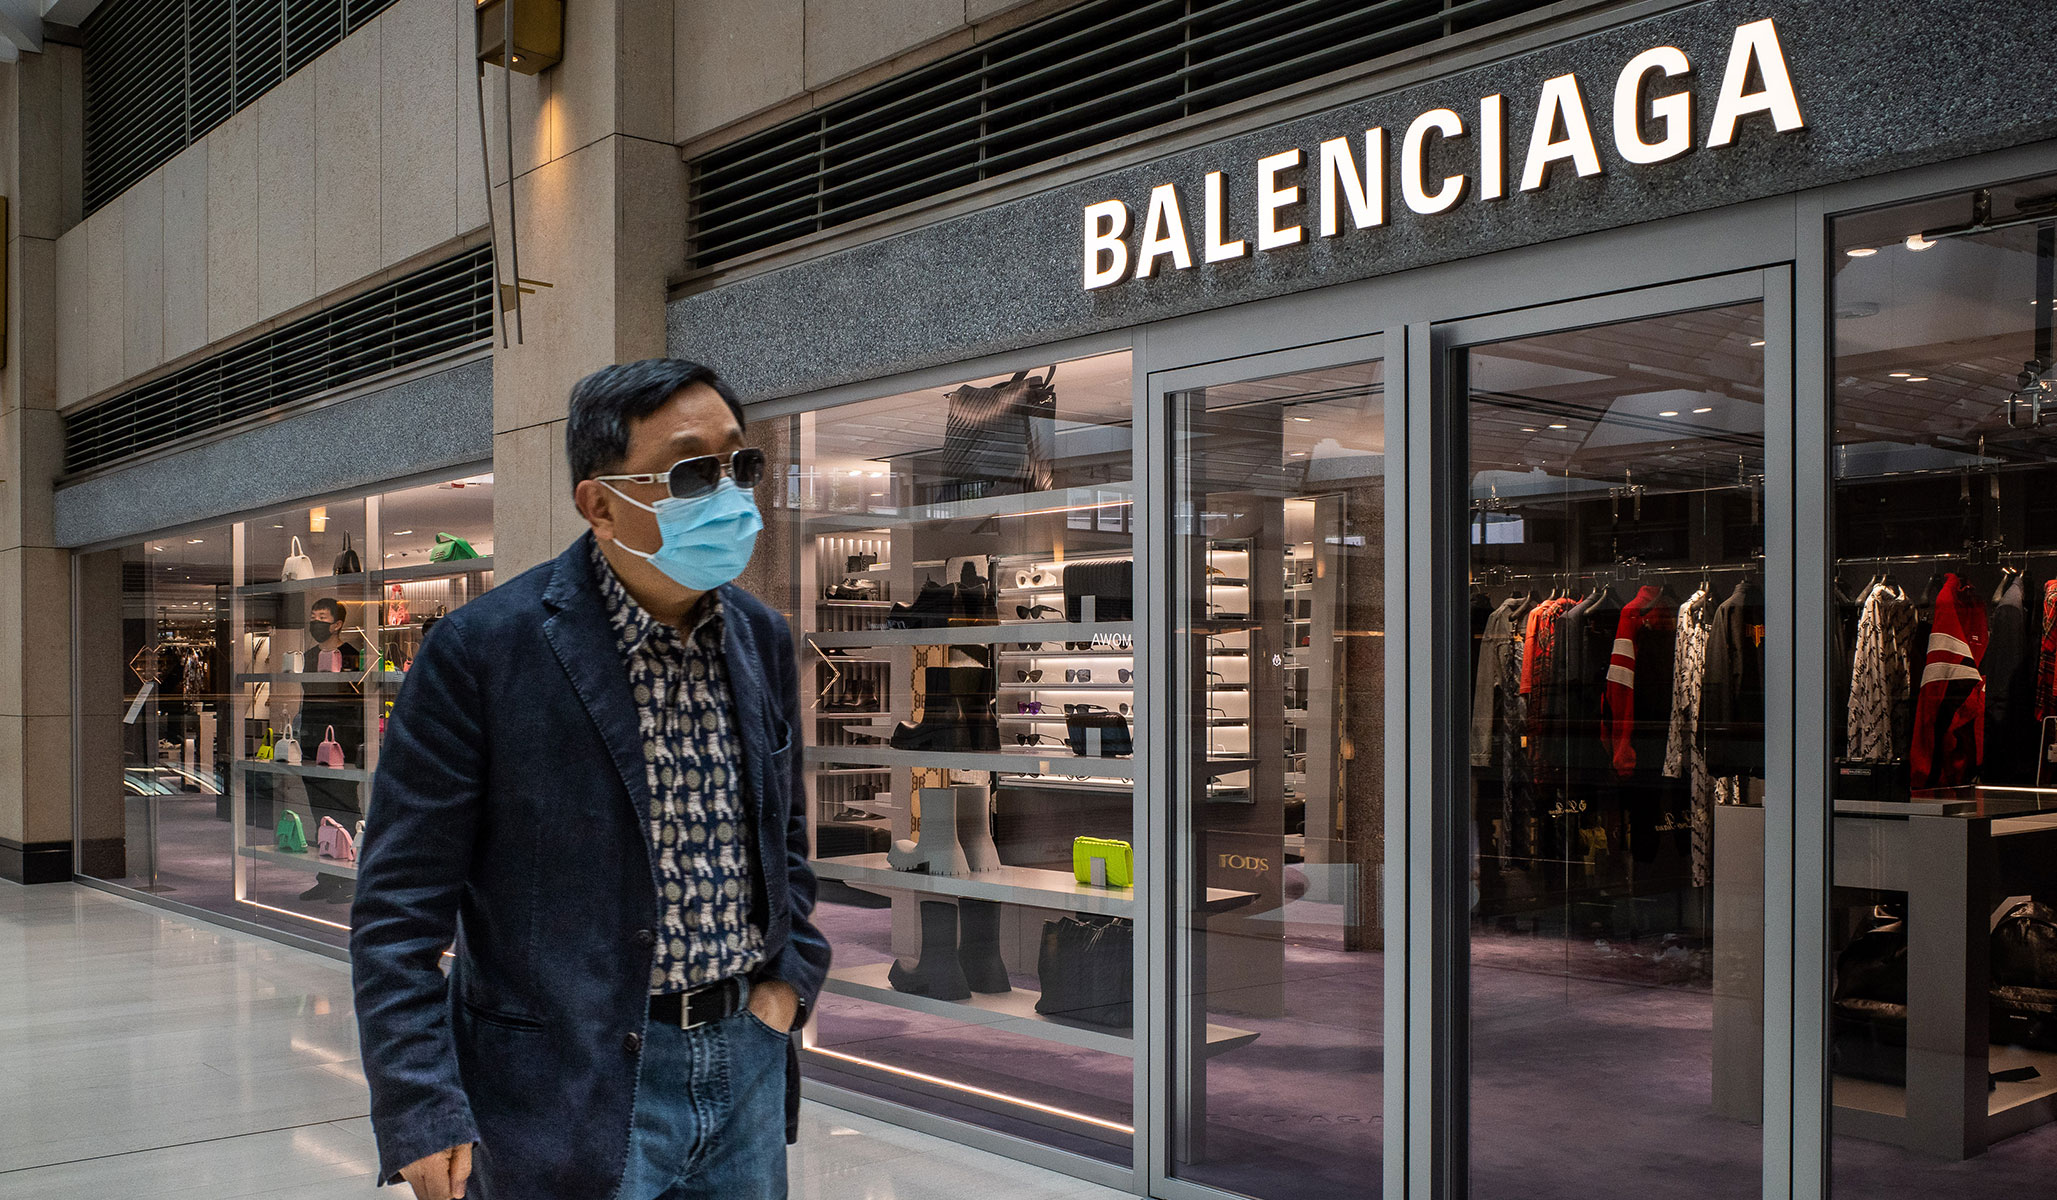 Balenciaga makes historic show on Wall Street in New York